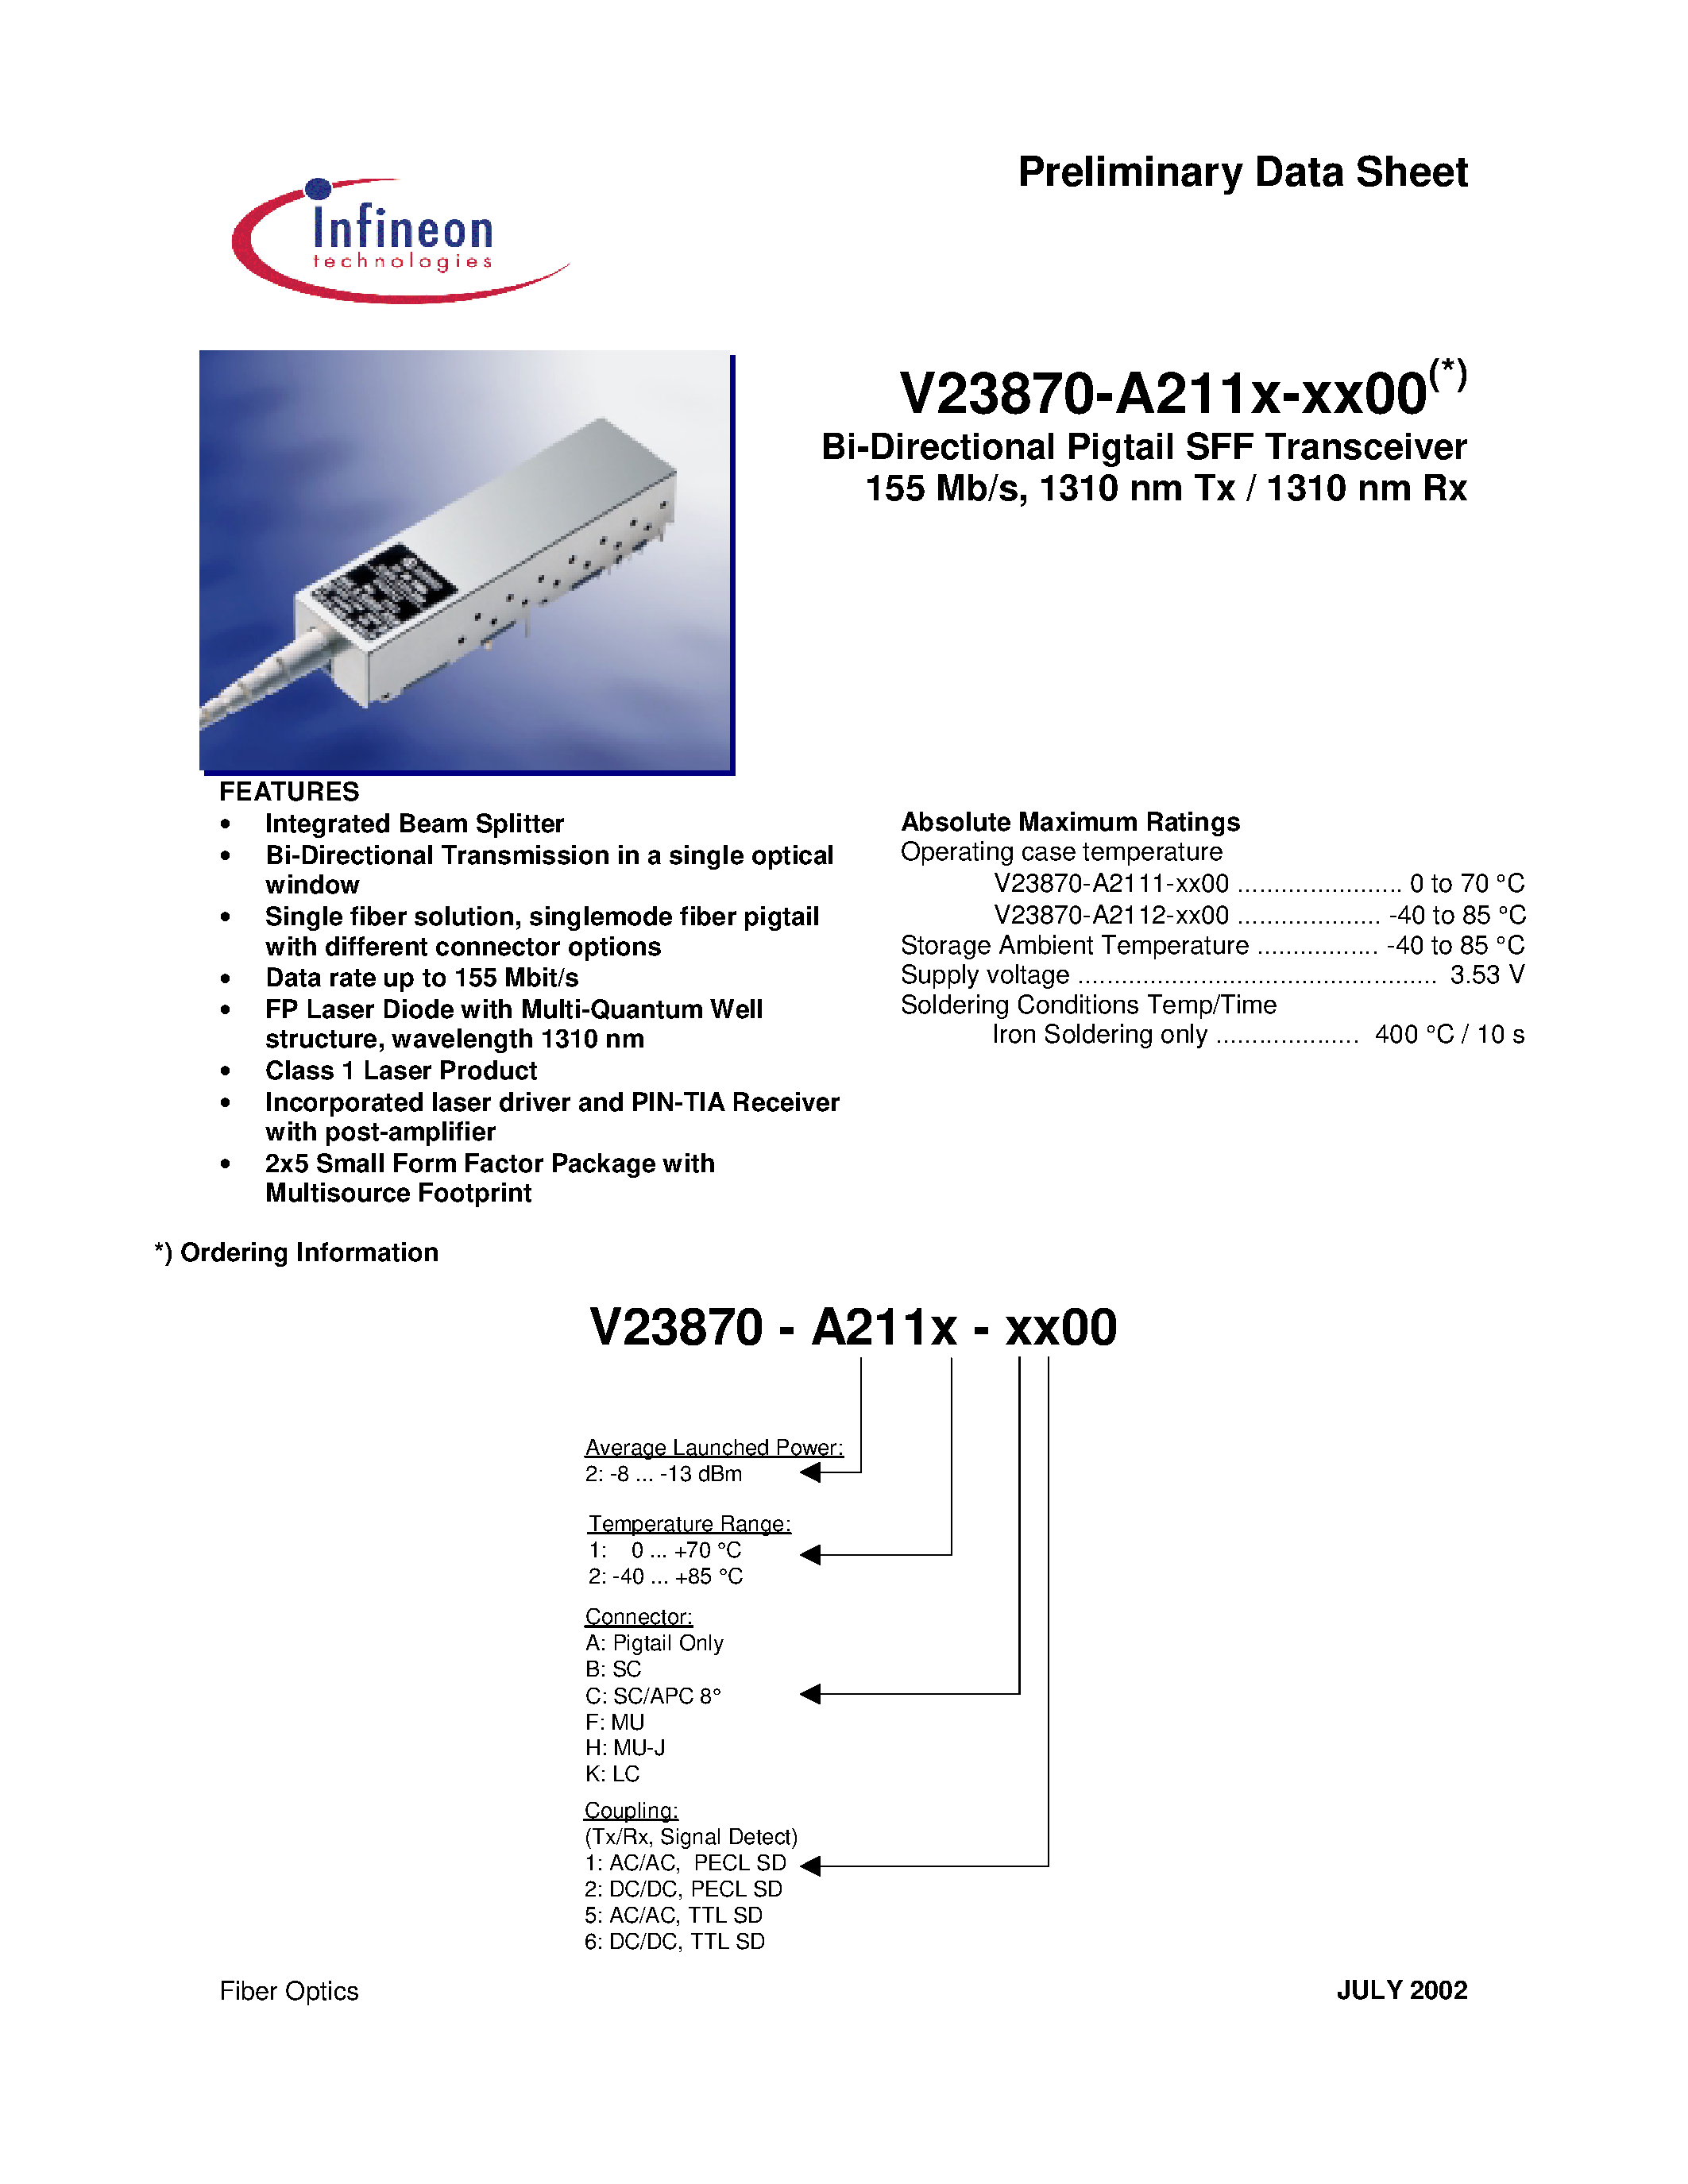 Даташит V23870-A2112-A600 - Bi-Directional Pigtail SFF Transceiver 155 Mb/s/ 1310 nm Tx / 1310 nm Rx страница 1